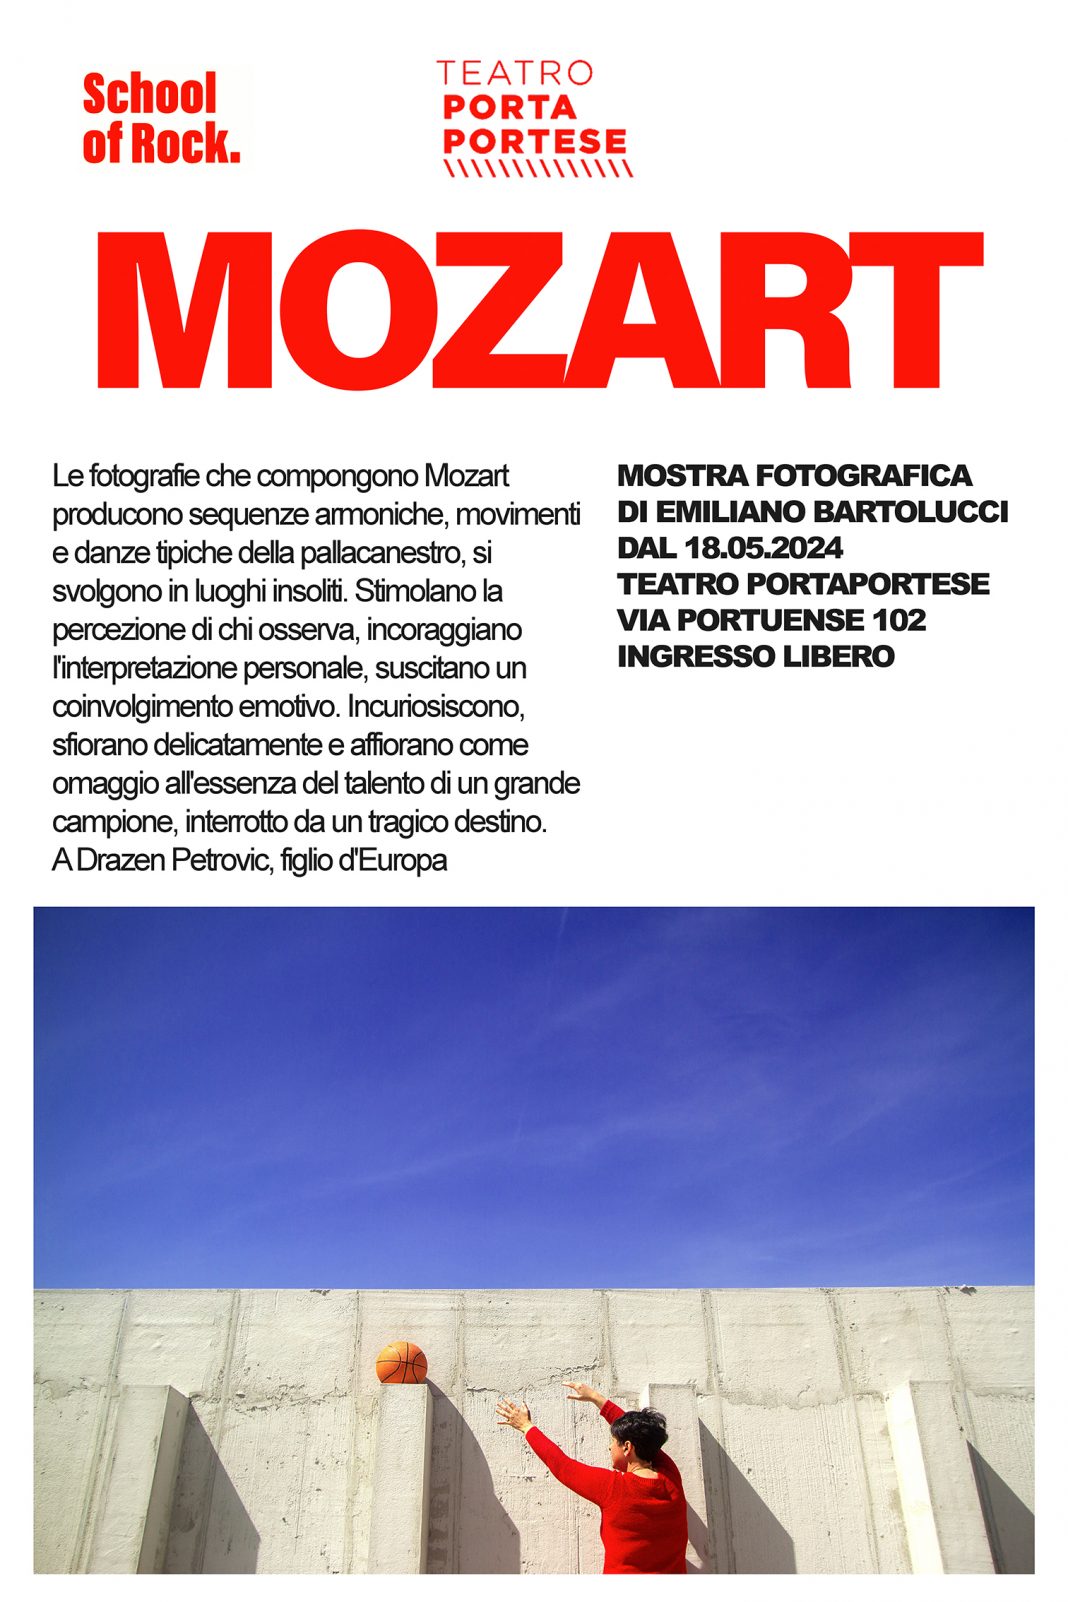 Mozarthttps://www.exibart.com/repository/media/formidable/11/img/de5/mozart-1068x1602.jpg